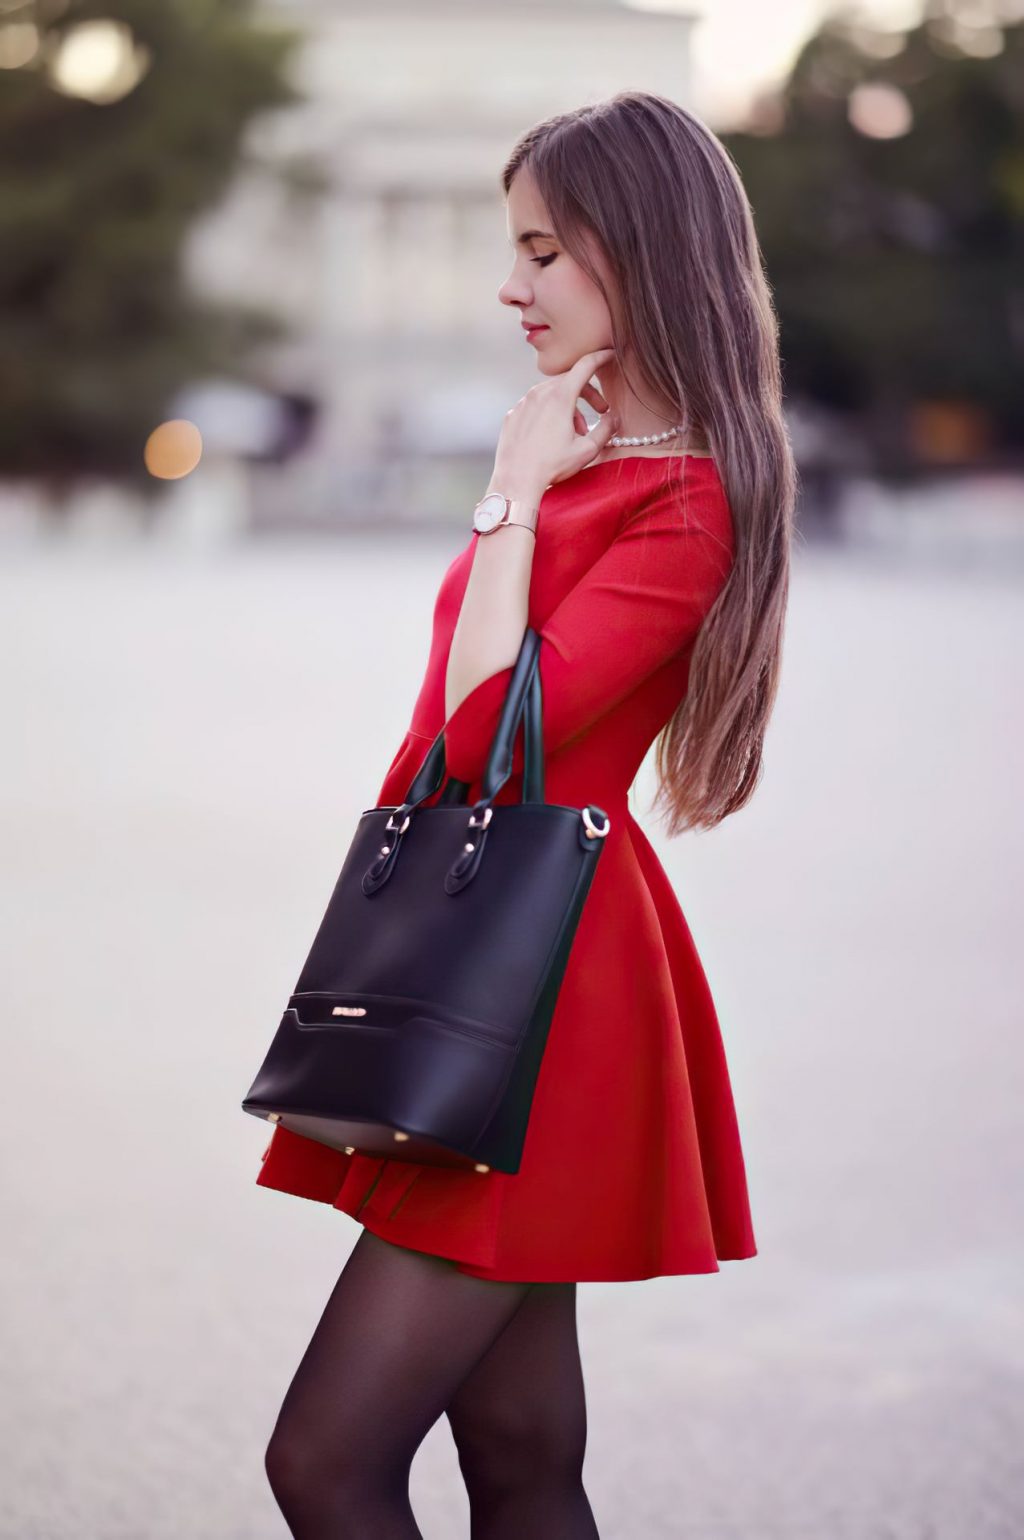 Sexy Ariadna Majewska Poses in a Red Dress (13 Photos)